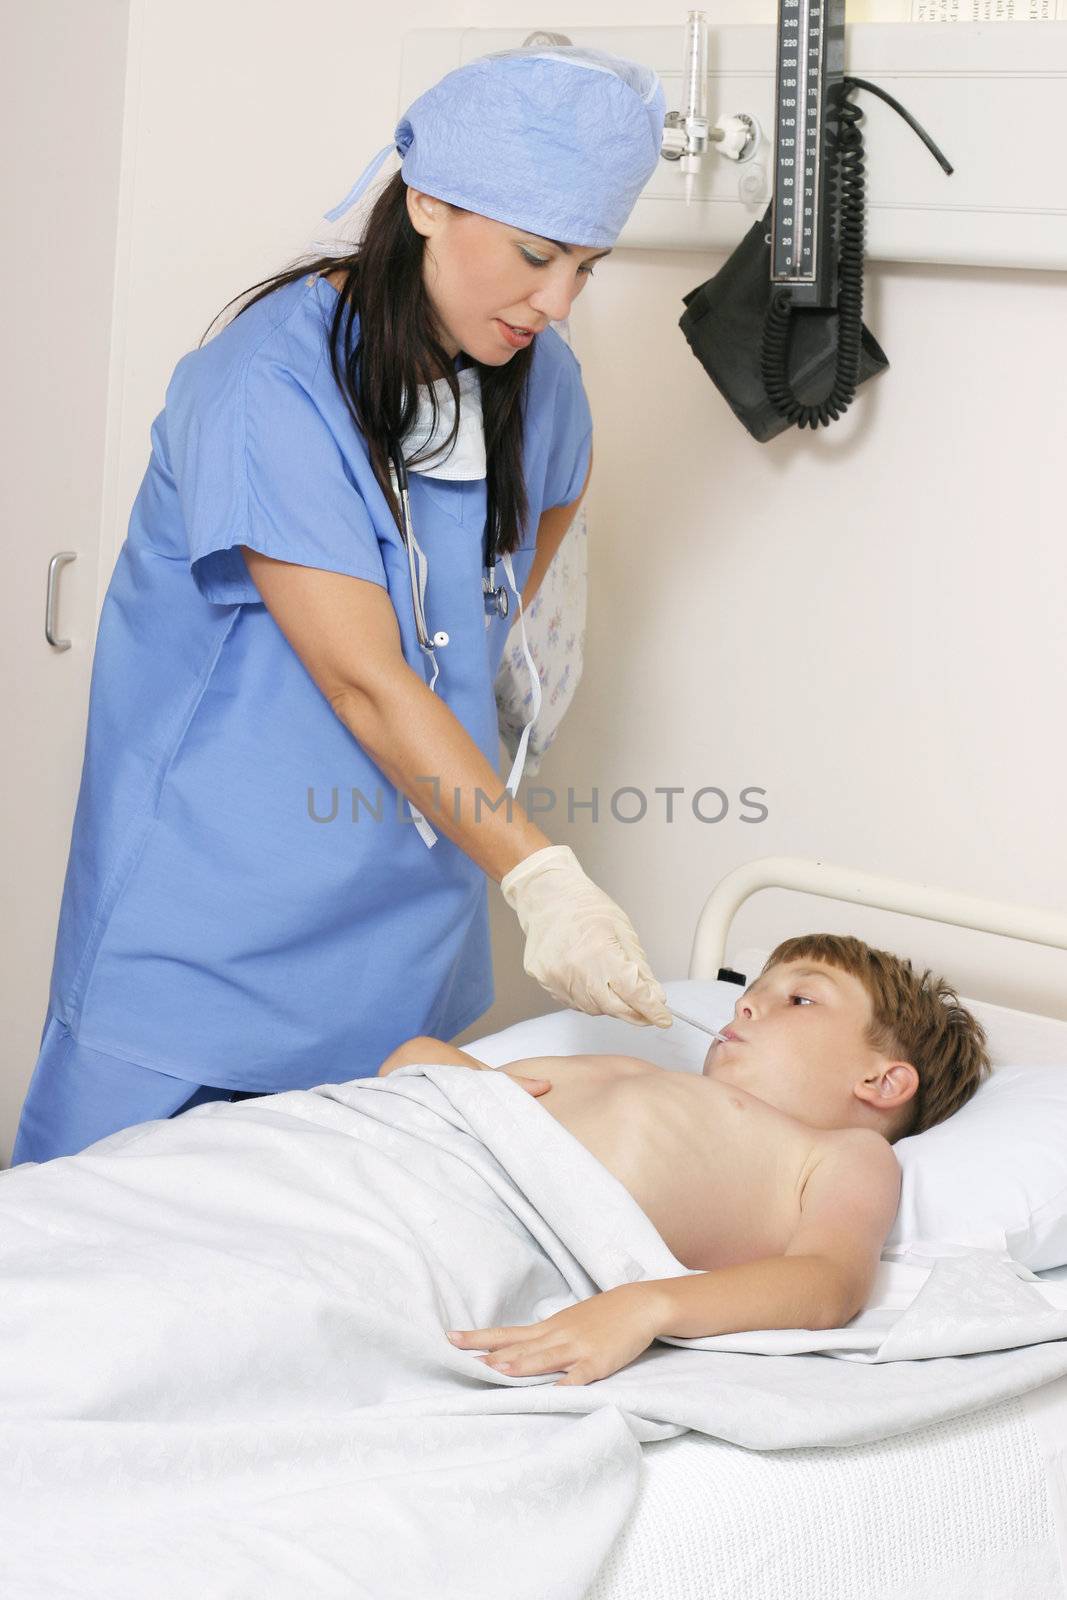 Nurse in scrubs takes a child's temperature
